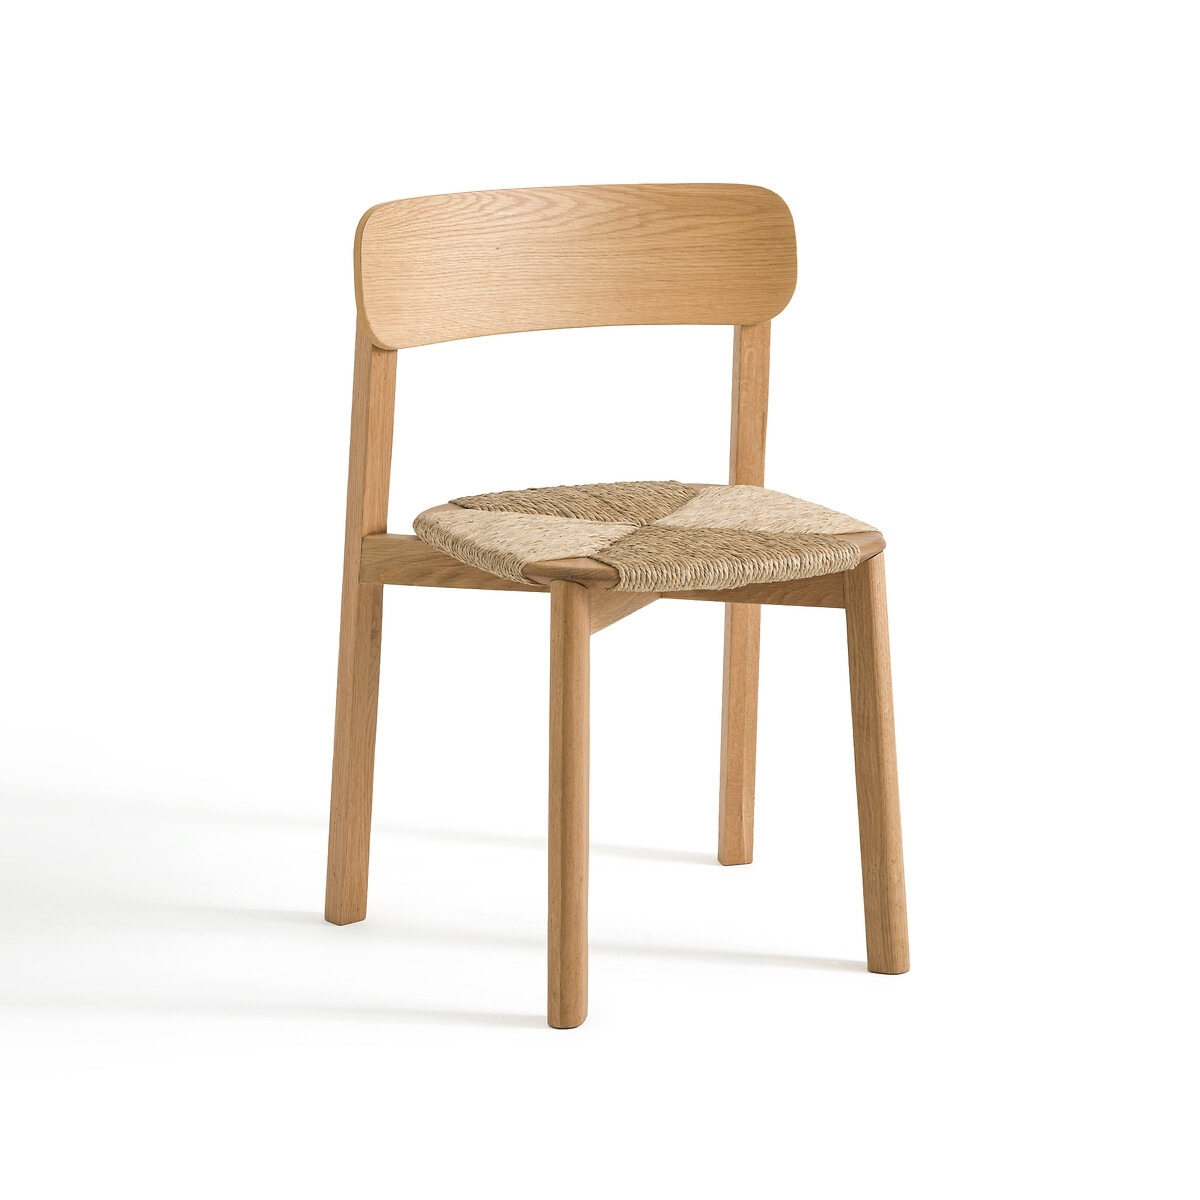 Batignolles Oak Stackable Chair, designed by E. Gallina - image 1